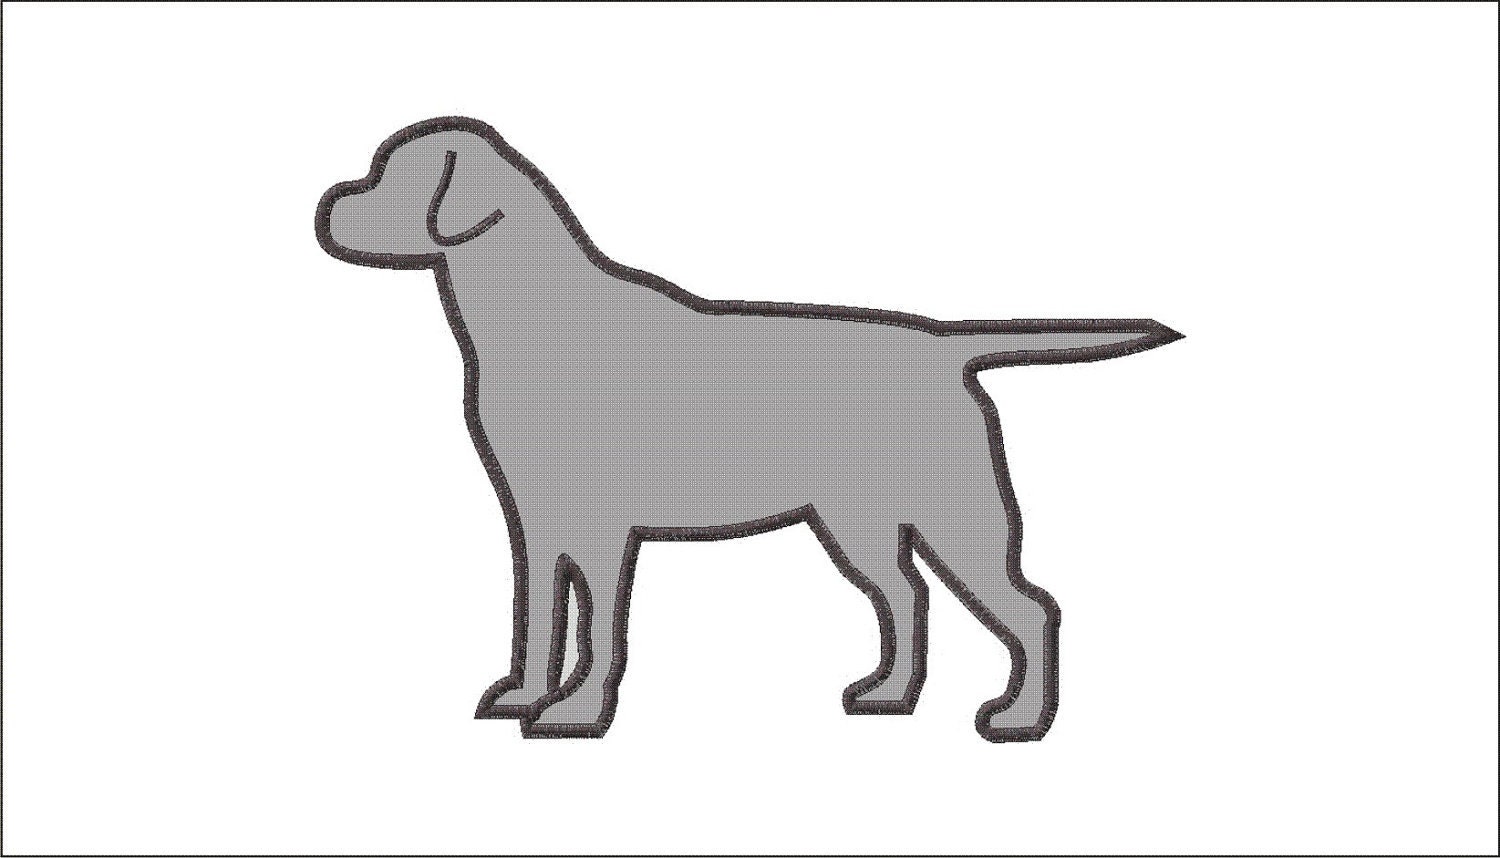 labrador head silhouette